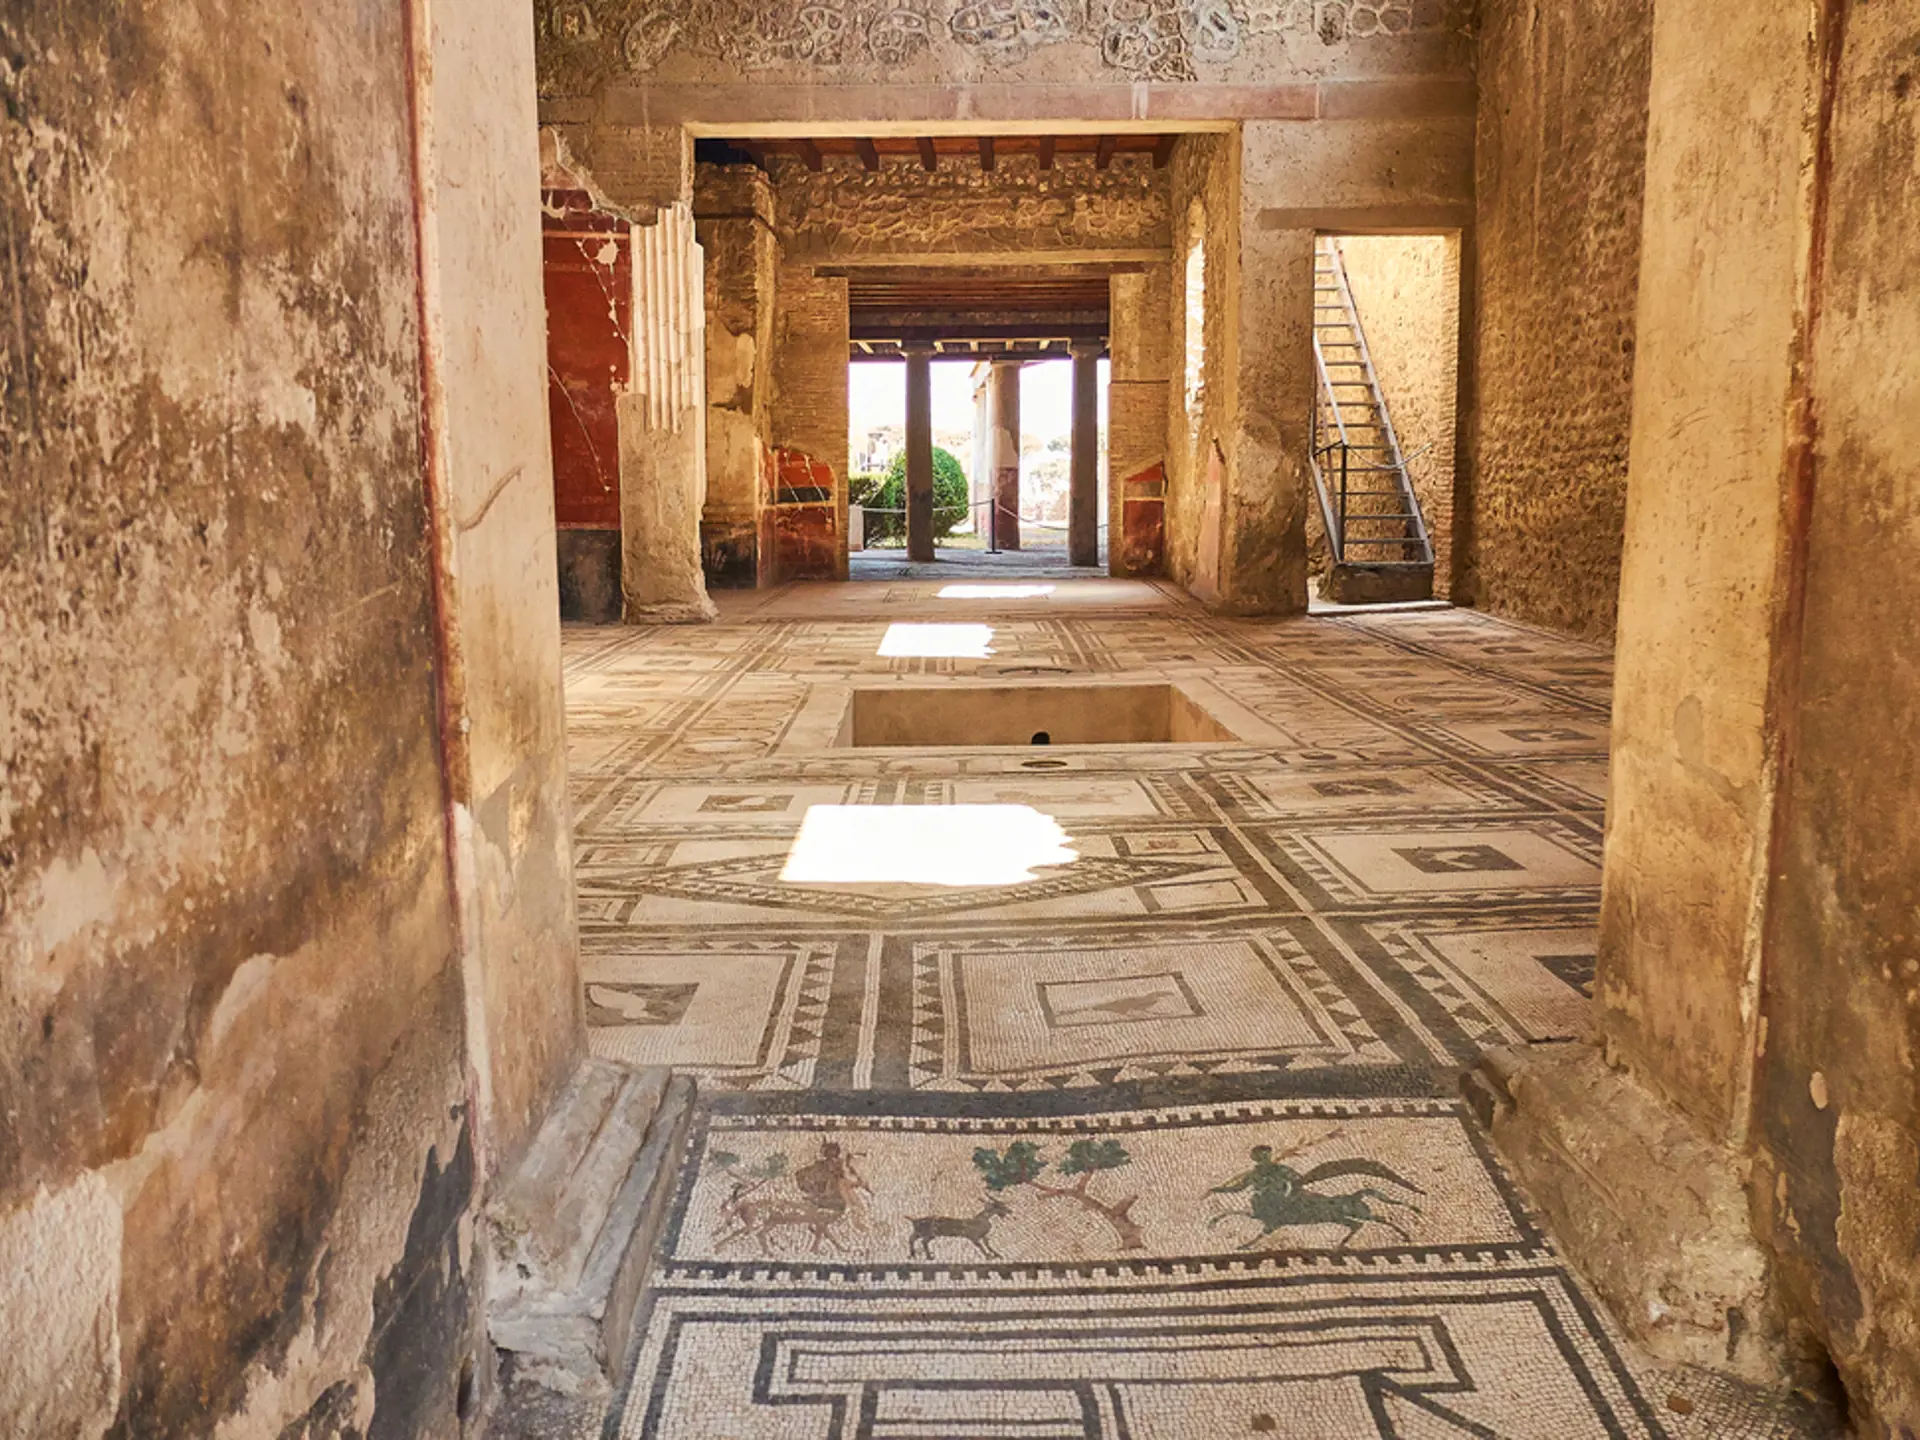 Utsnitt av et mosaikkgulv i en gammel romersk villa i Pompeii